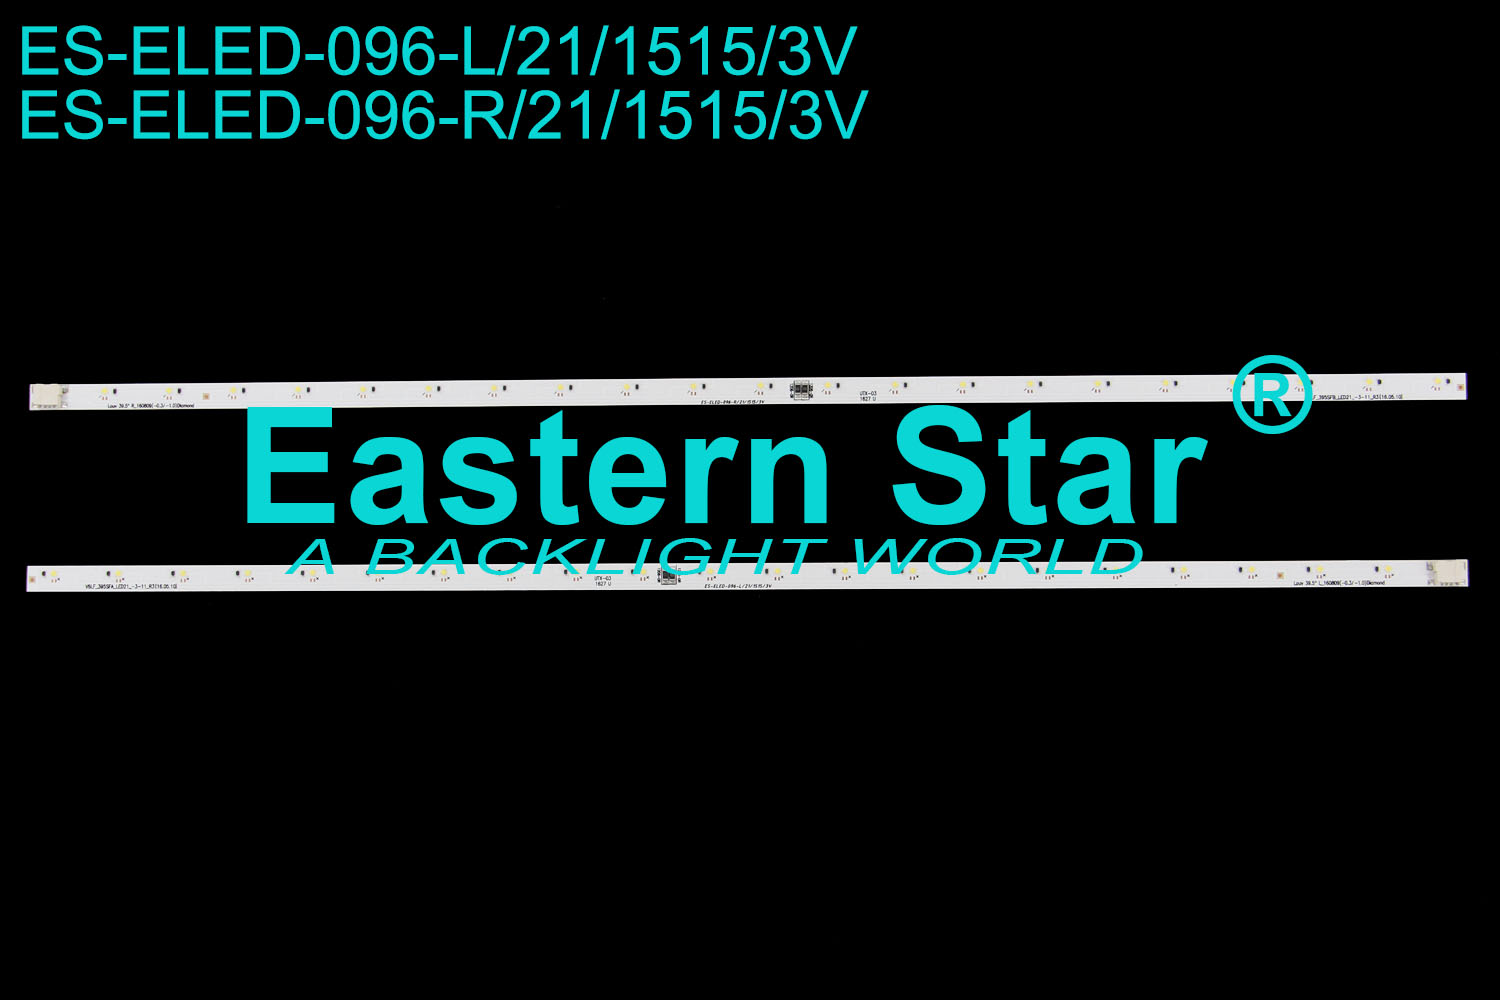 ES-ELED-096 ELED/EDGE TV backlight use for Samsung 39.5'' 39.5" L_160829(-0.3/-0.1) Diamond V6LF_395SFA_LED21_-3-11_R3(16.05.10)  39.5" R_160829(-0.3/-0.1) Diamond V6LF_395SFB_LED21_-3-11_R3(16.05.10) (/)